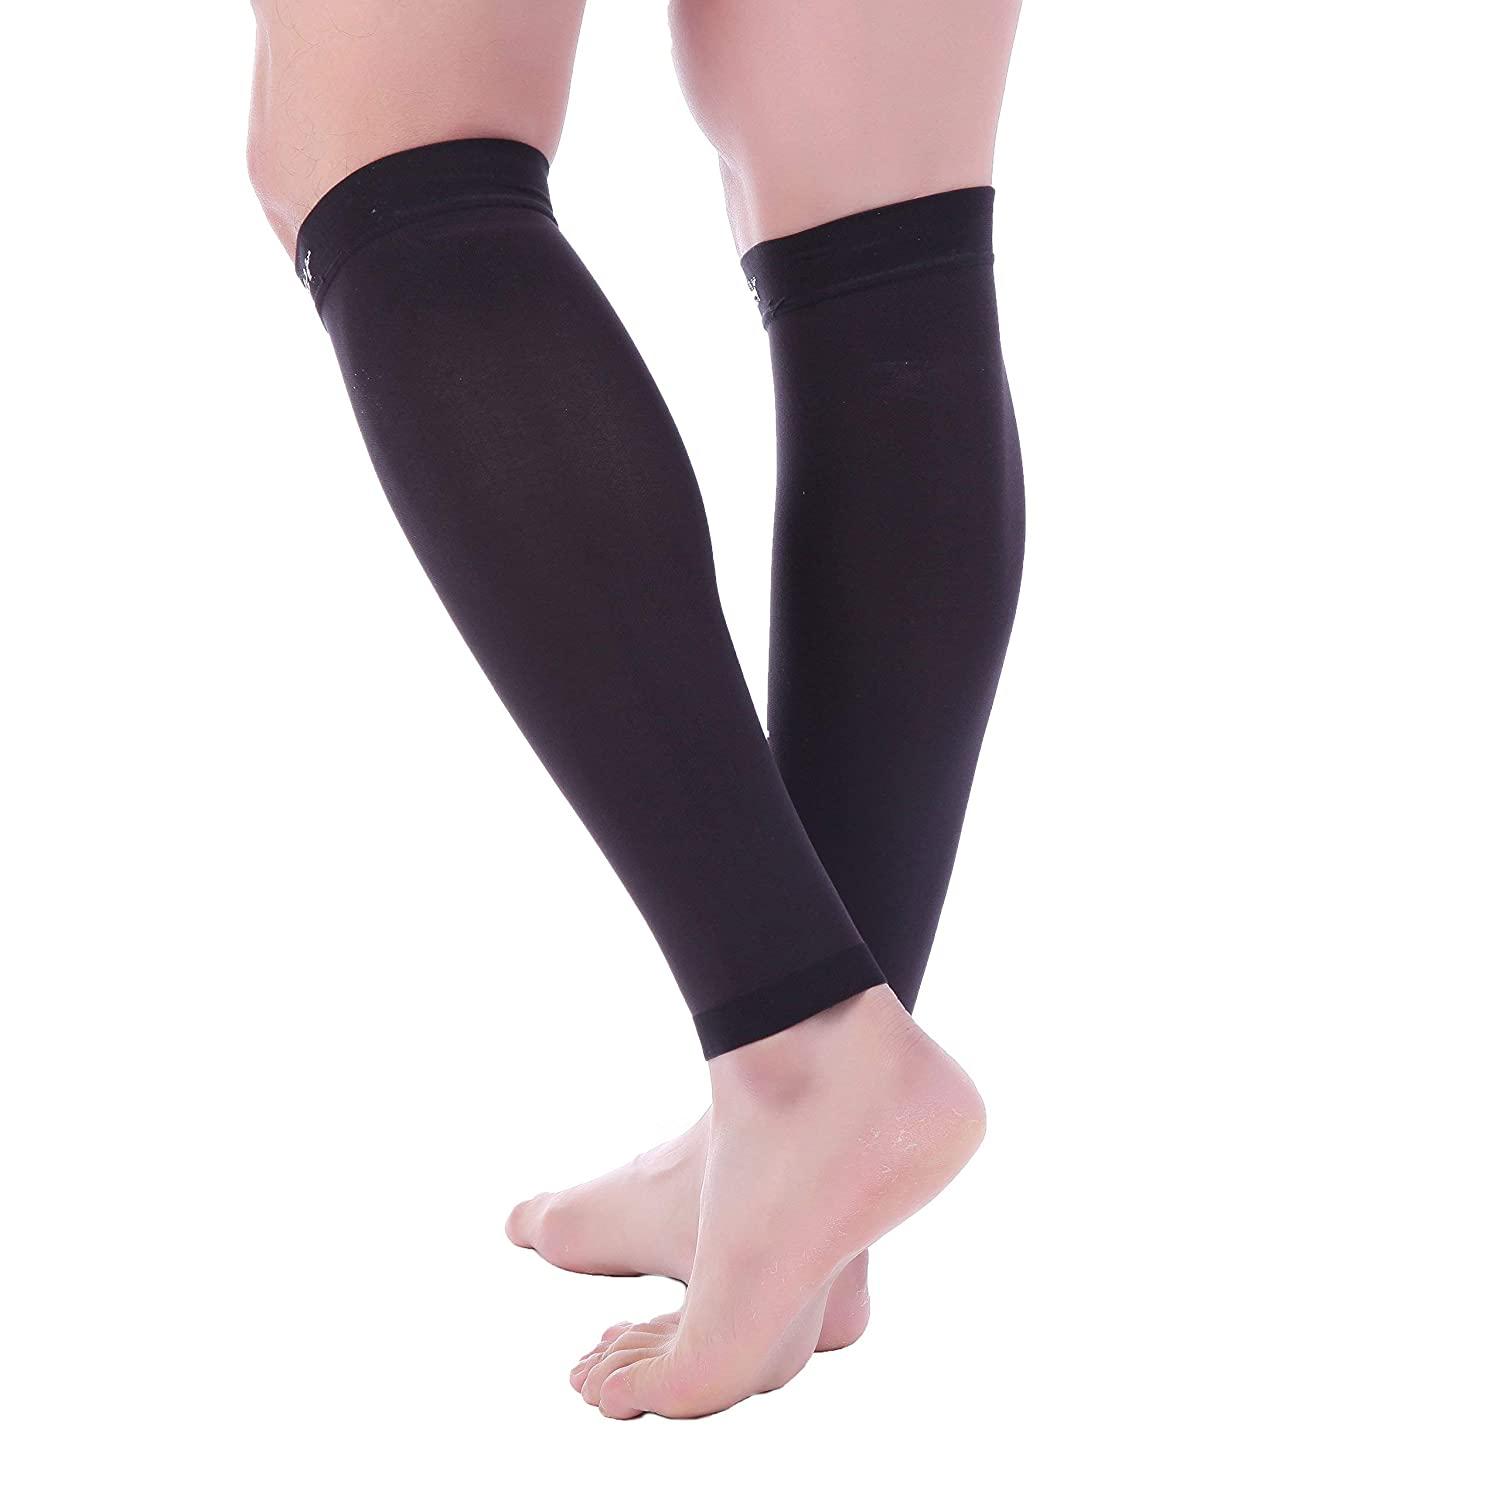  MGANG Calf Compression Sleeve, (2 Pairs) 20-30mmHg Leg Compression  Socks, Unisex for Pain Relief, Swelling, Edema, Maternity, Varicose Veins,  Shin Splint, Nursing, Travel, (Black+Beige) L/XL : Health & Household